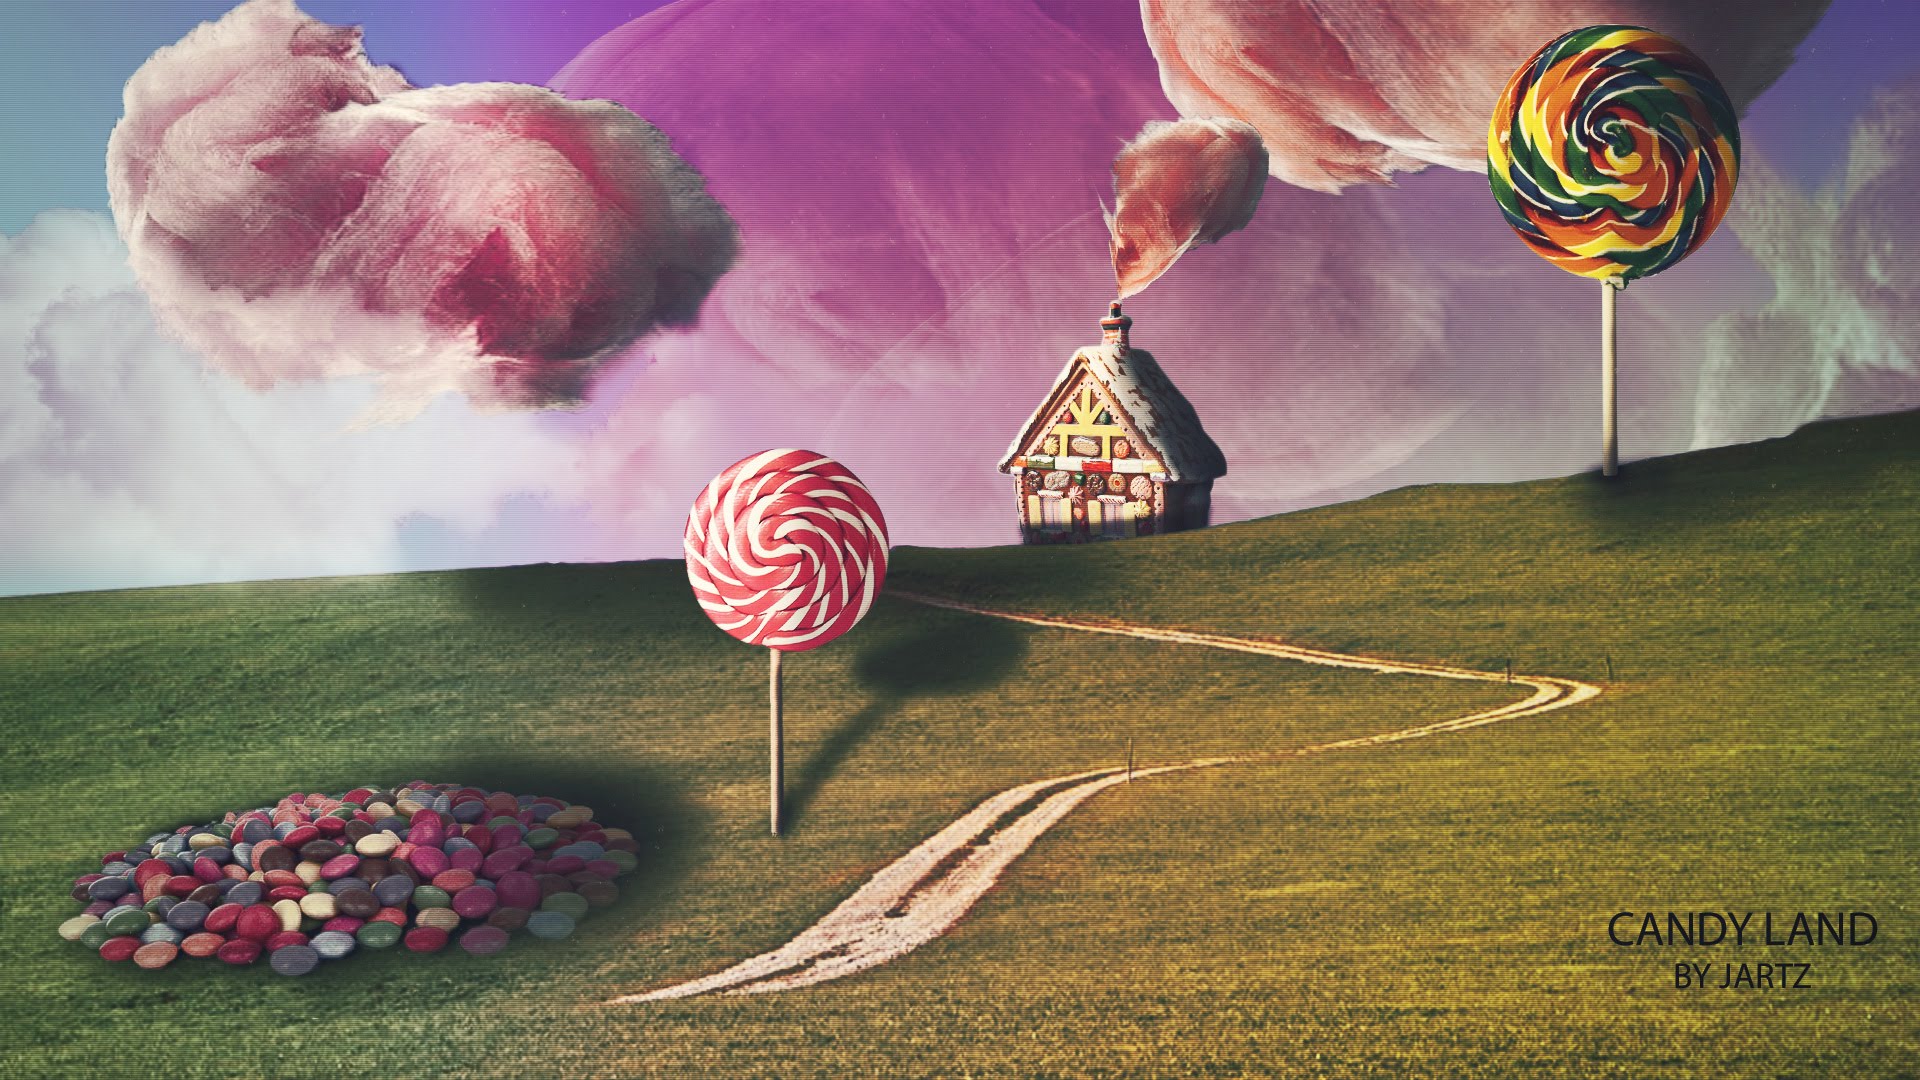 Wallpaper Candy Land By Jartz